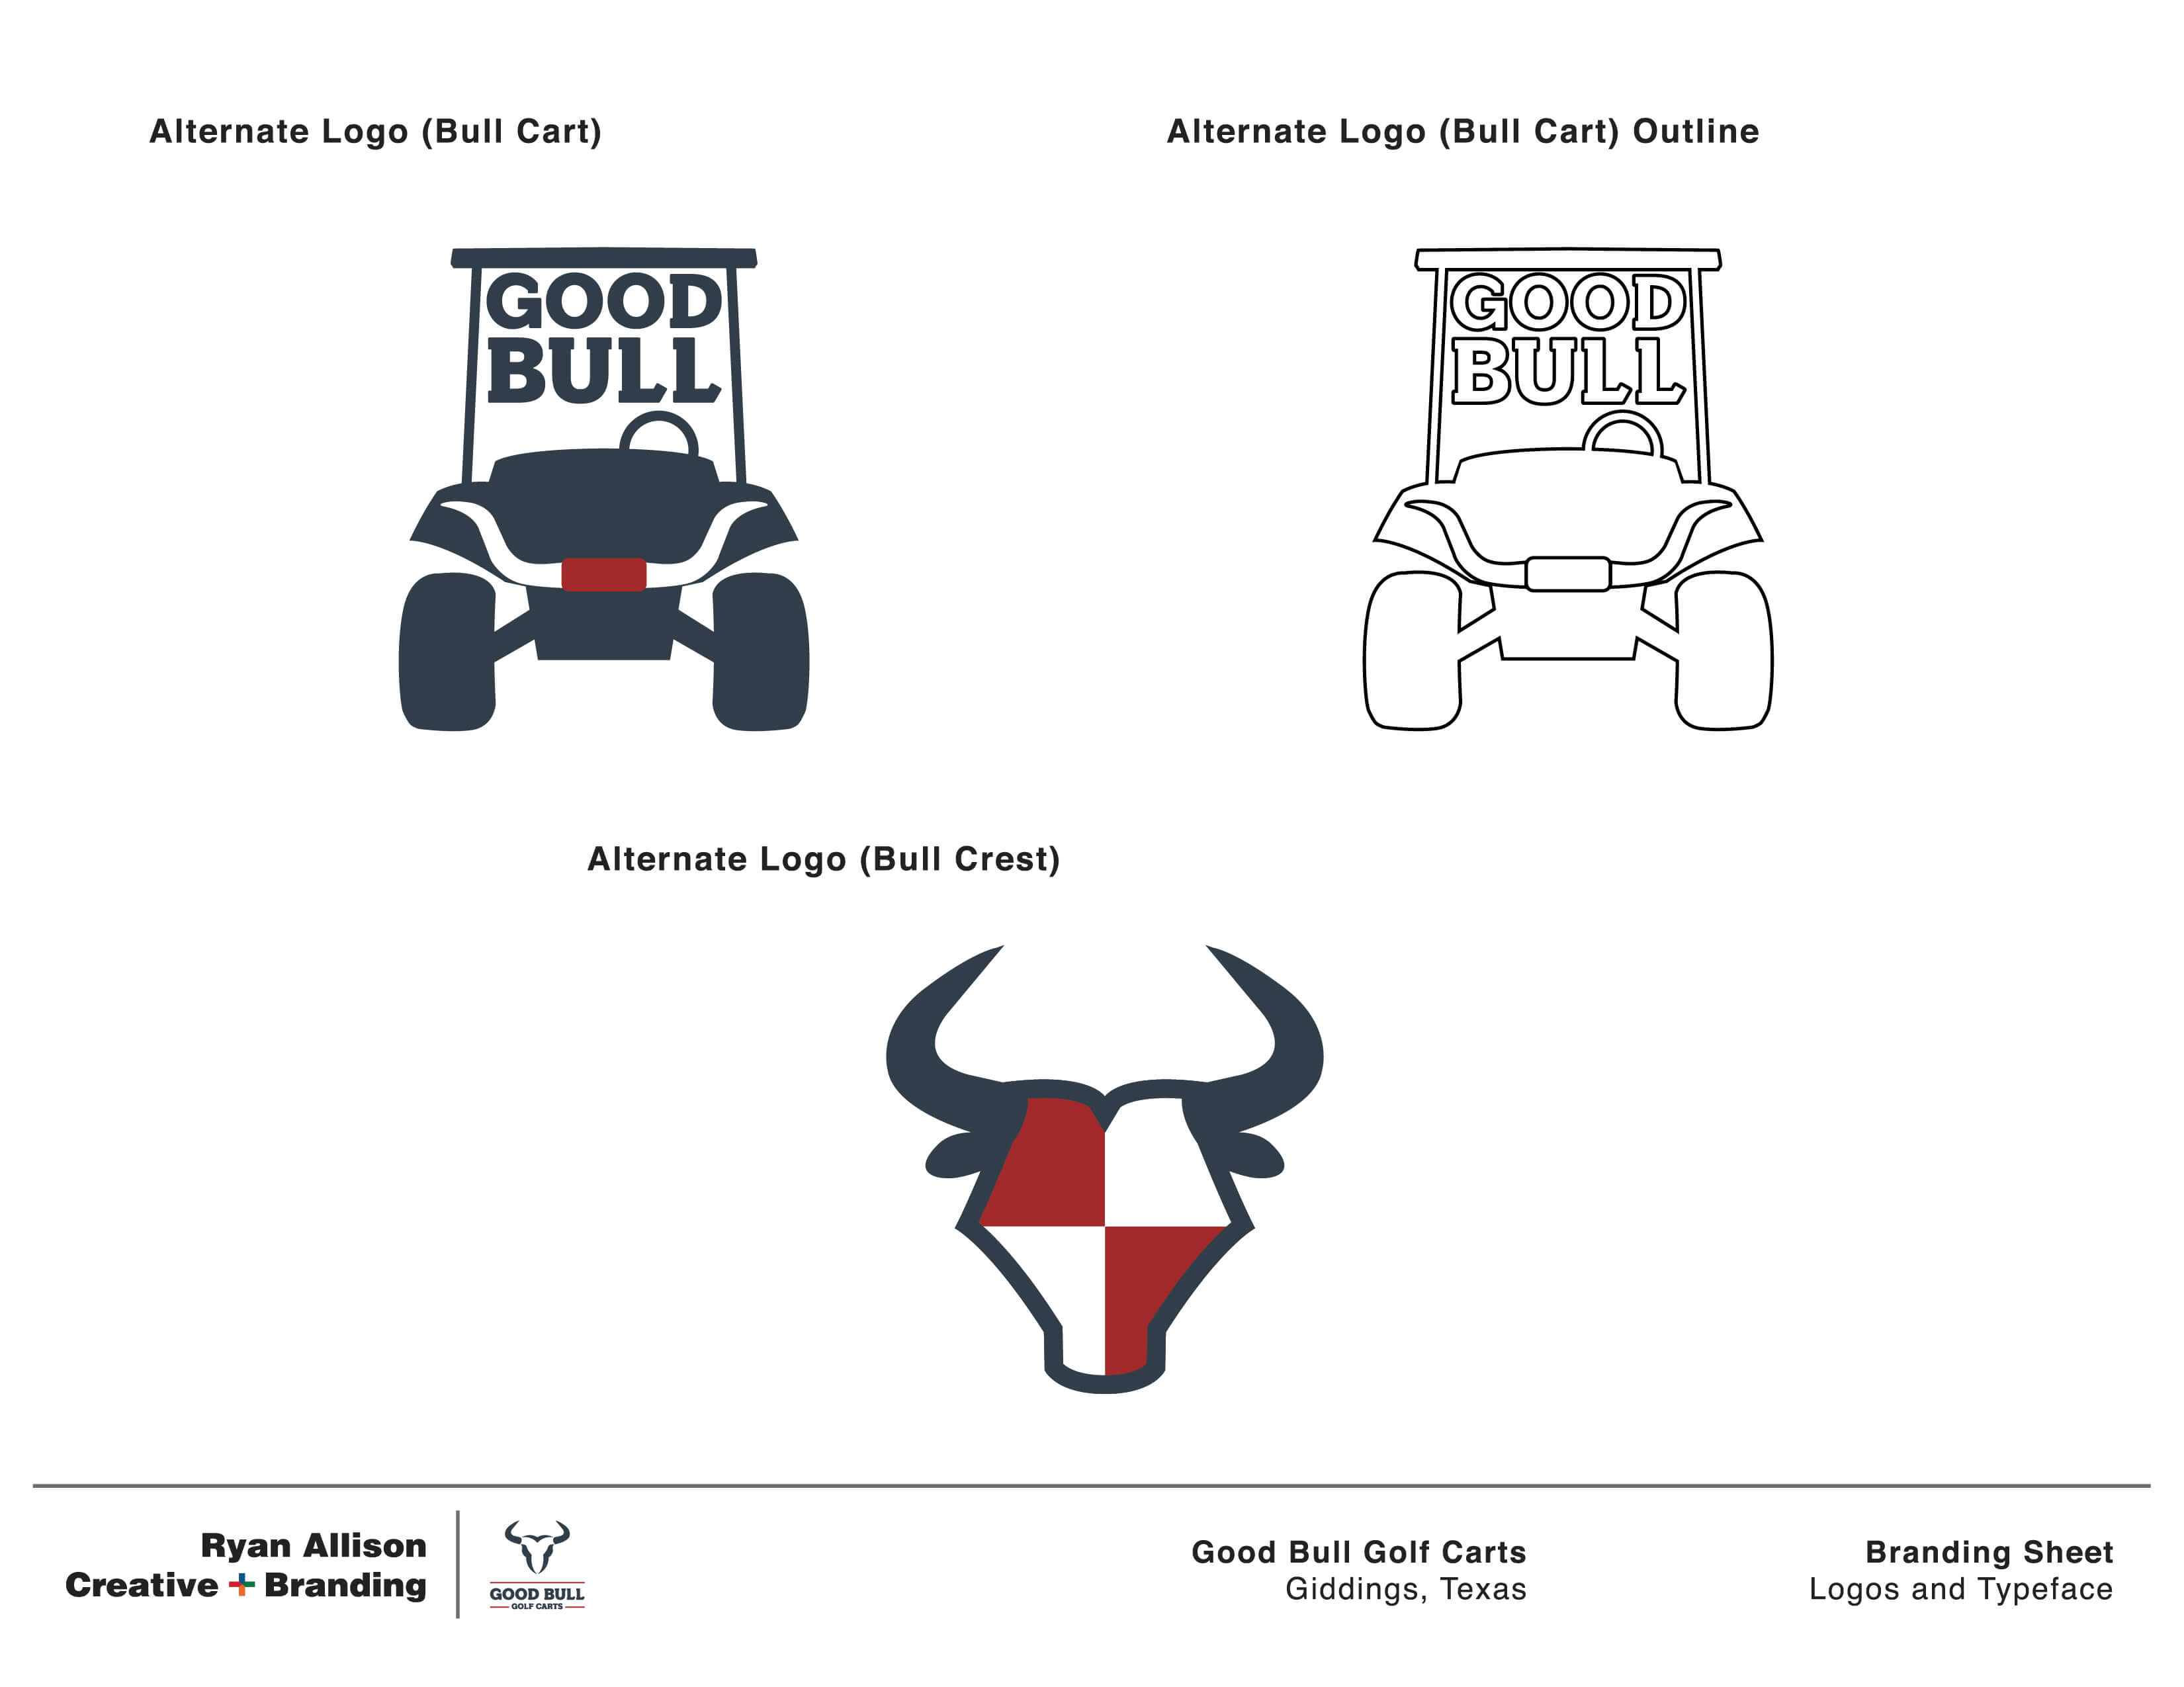 Good Bull Golf Carts - Branding Sheet Page 2 - Ryan Allison Creative + Branding